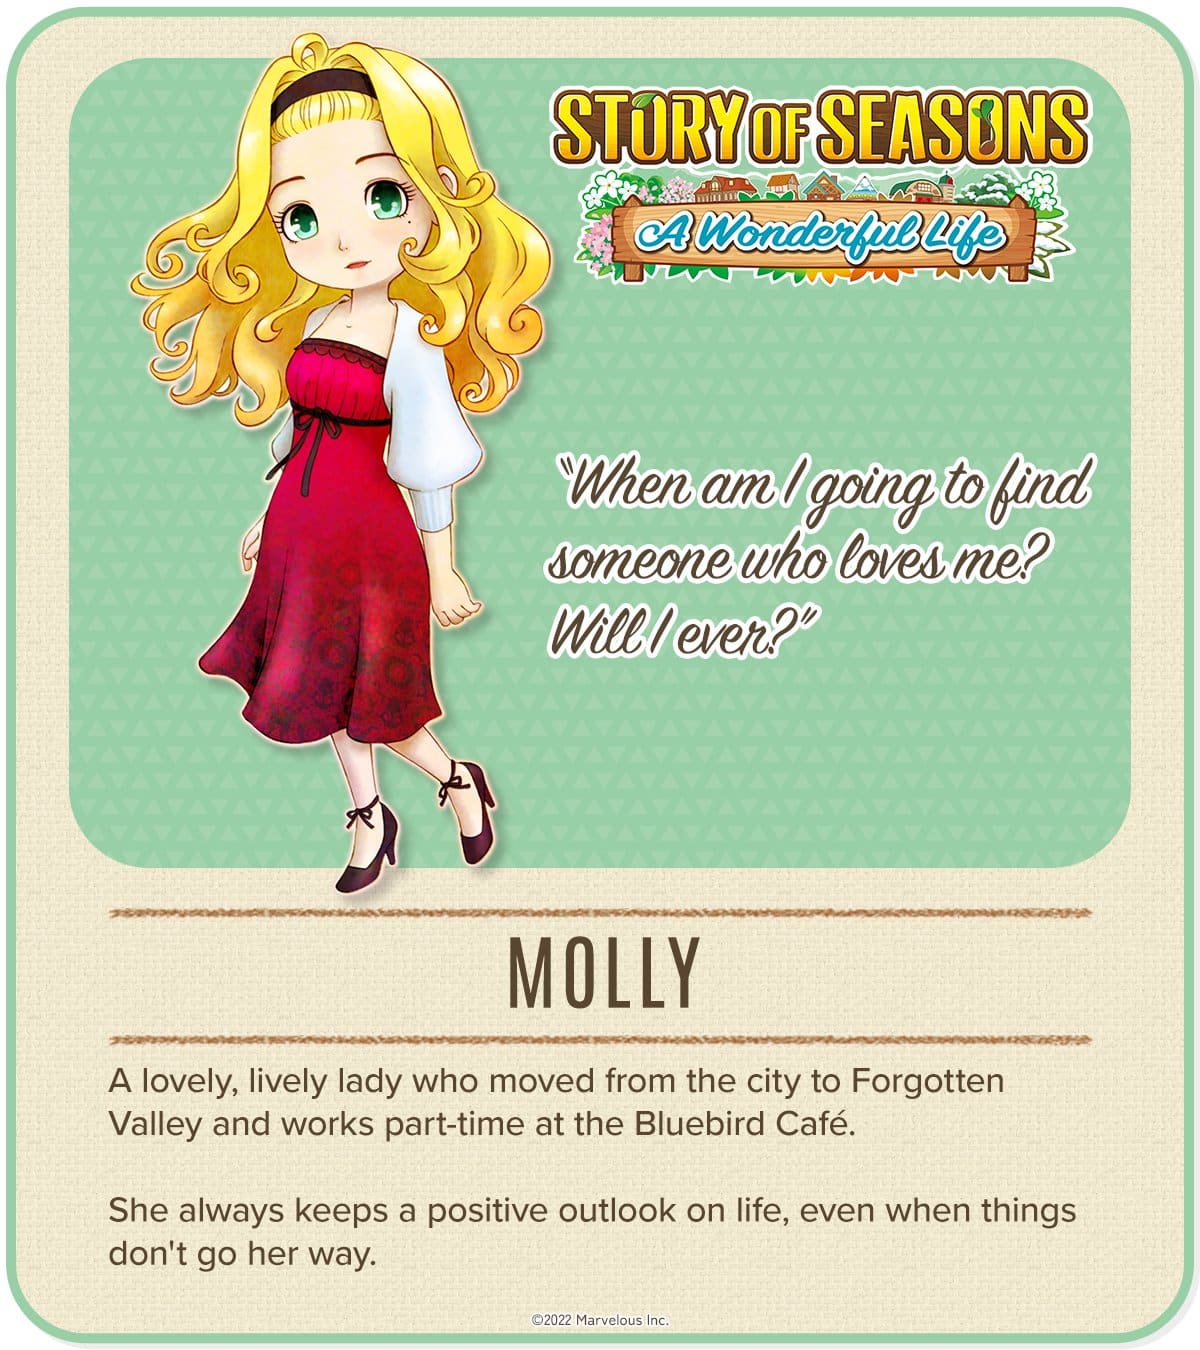 story of seasons molly profile